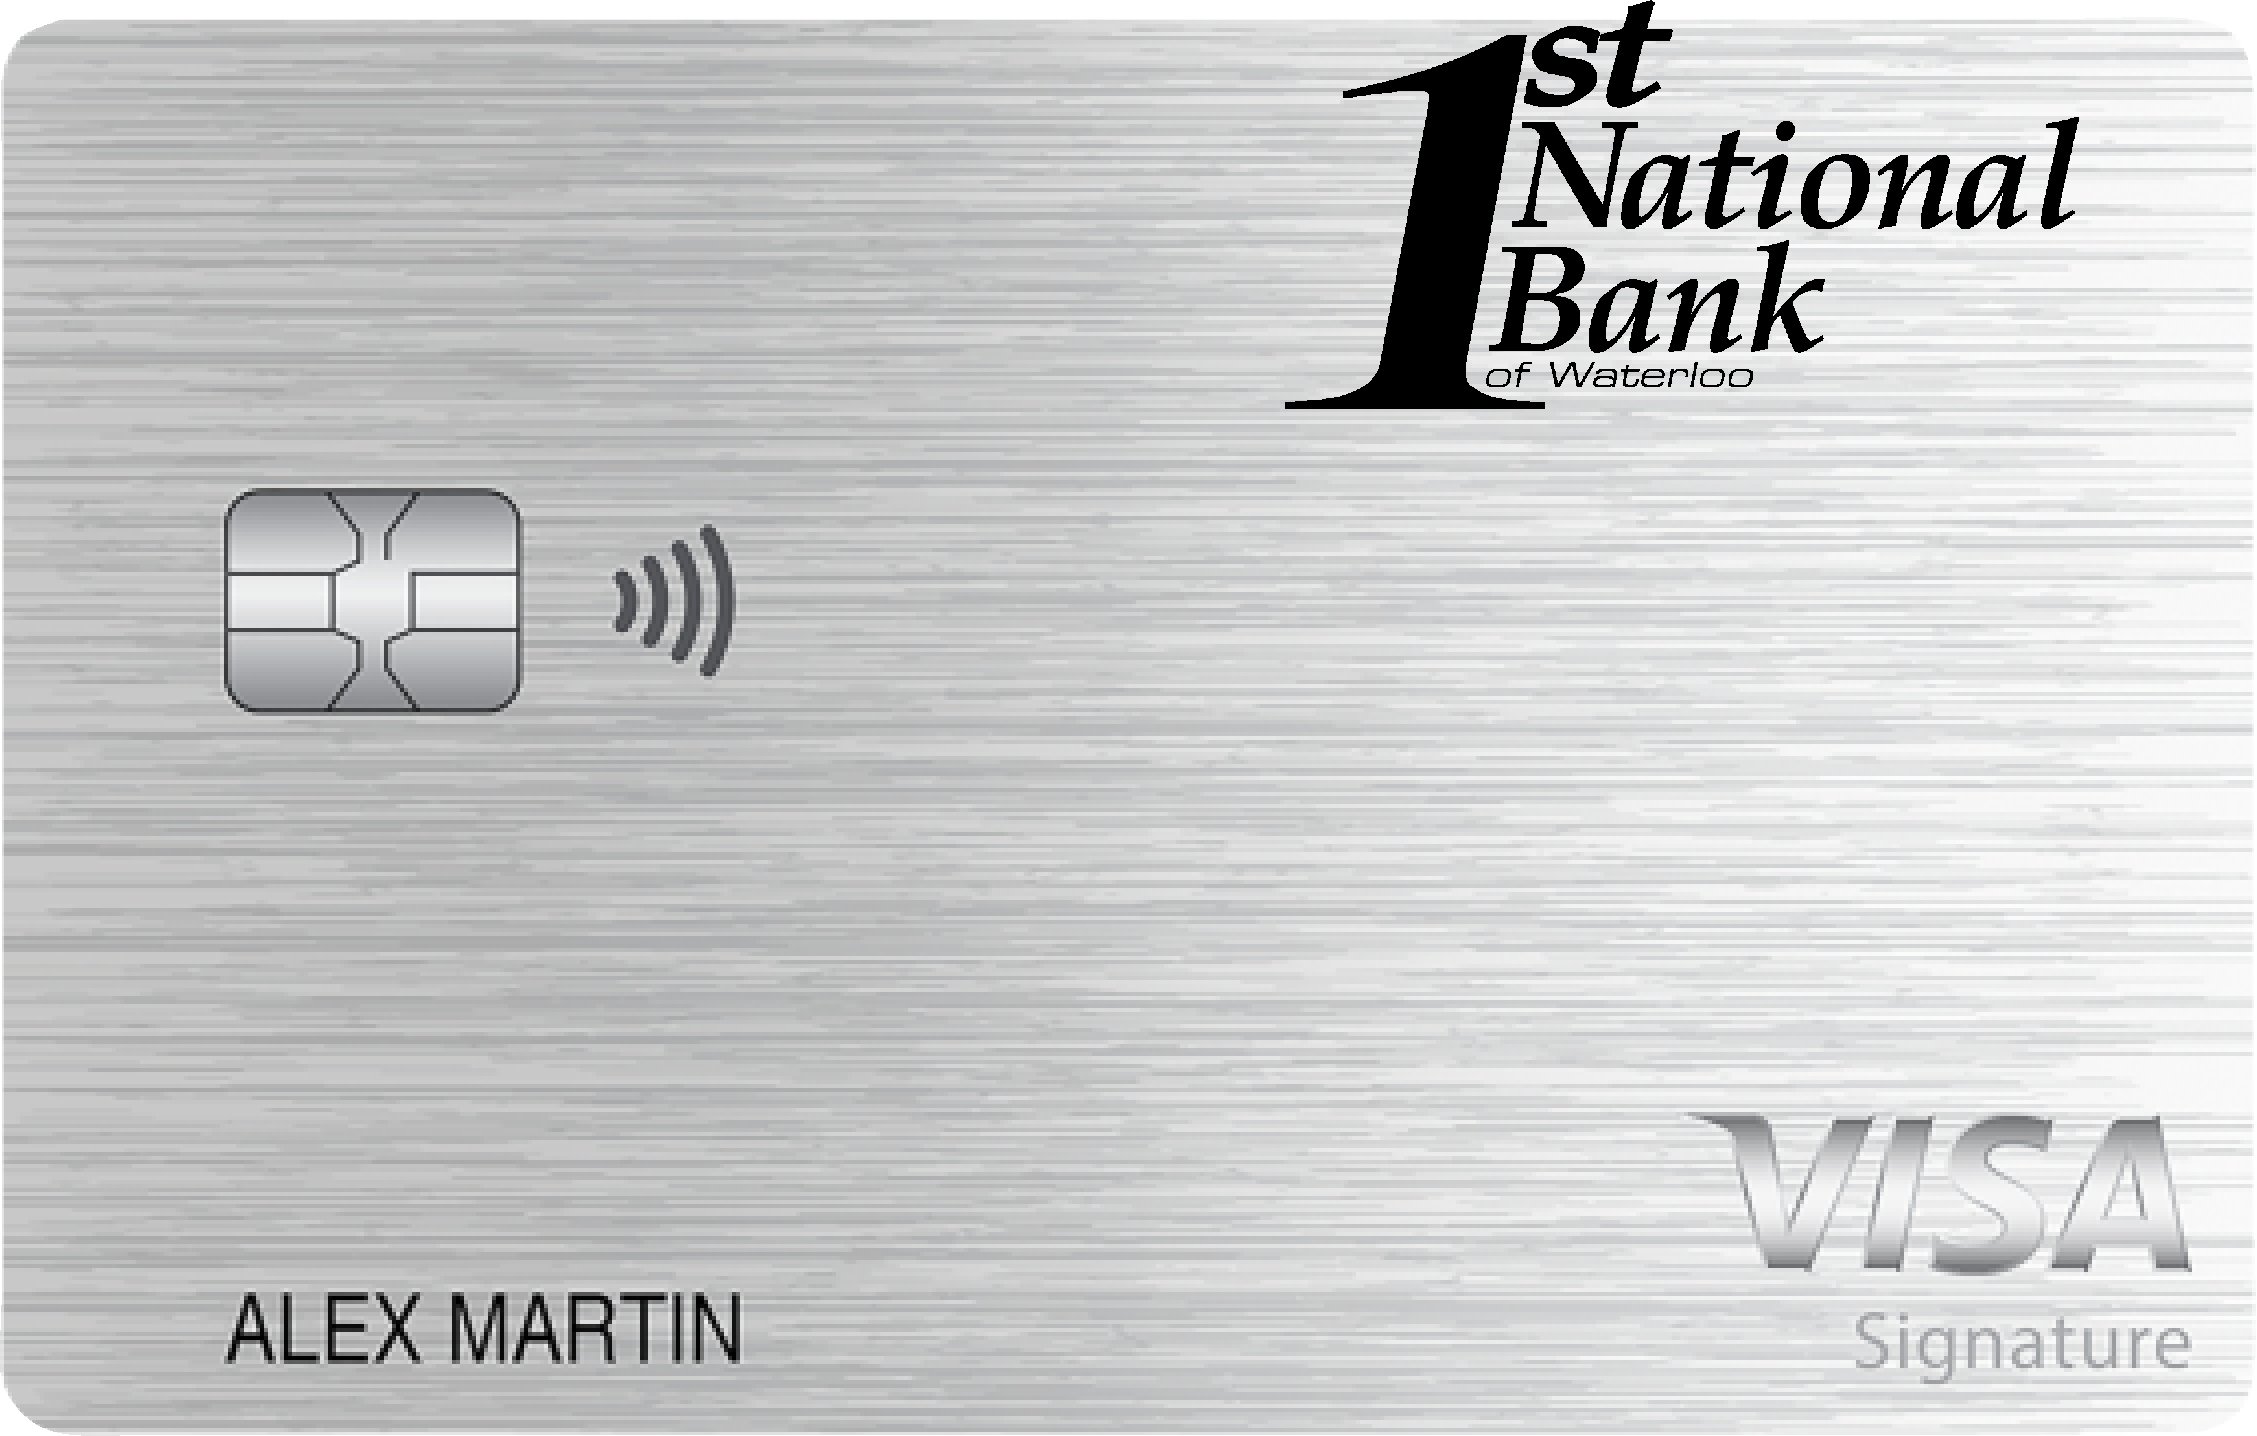 First National Bank of Waterloo Travel Rewards+ Card